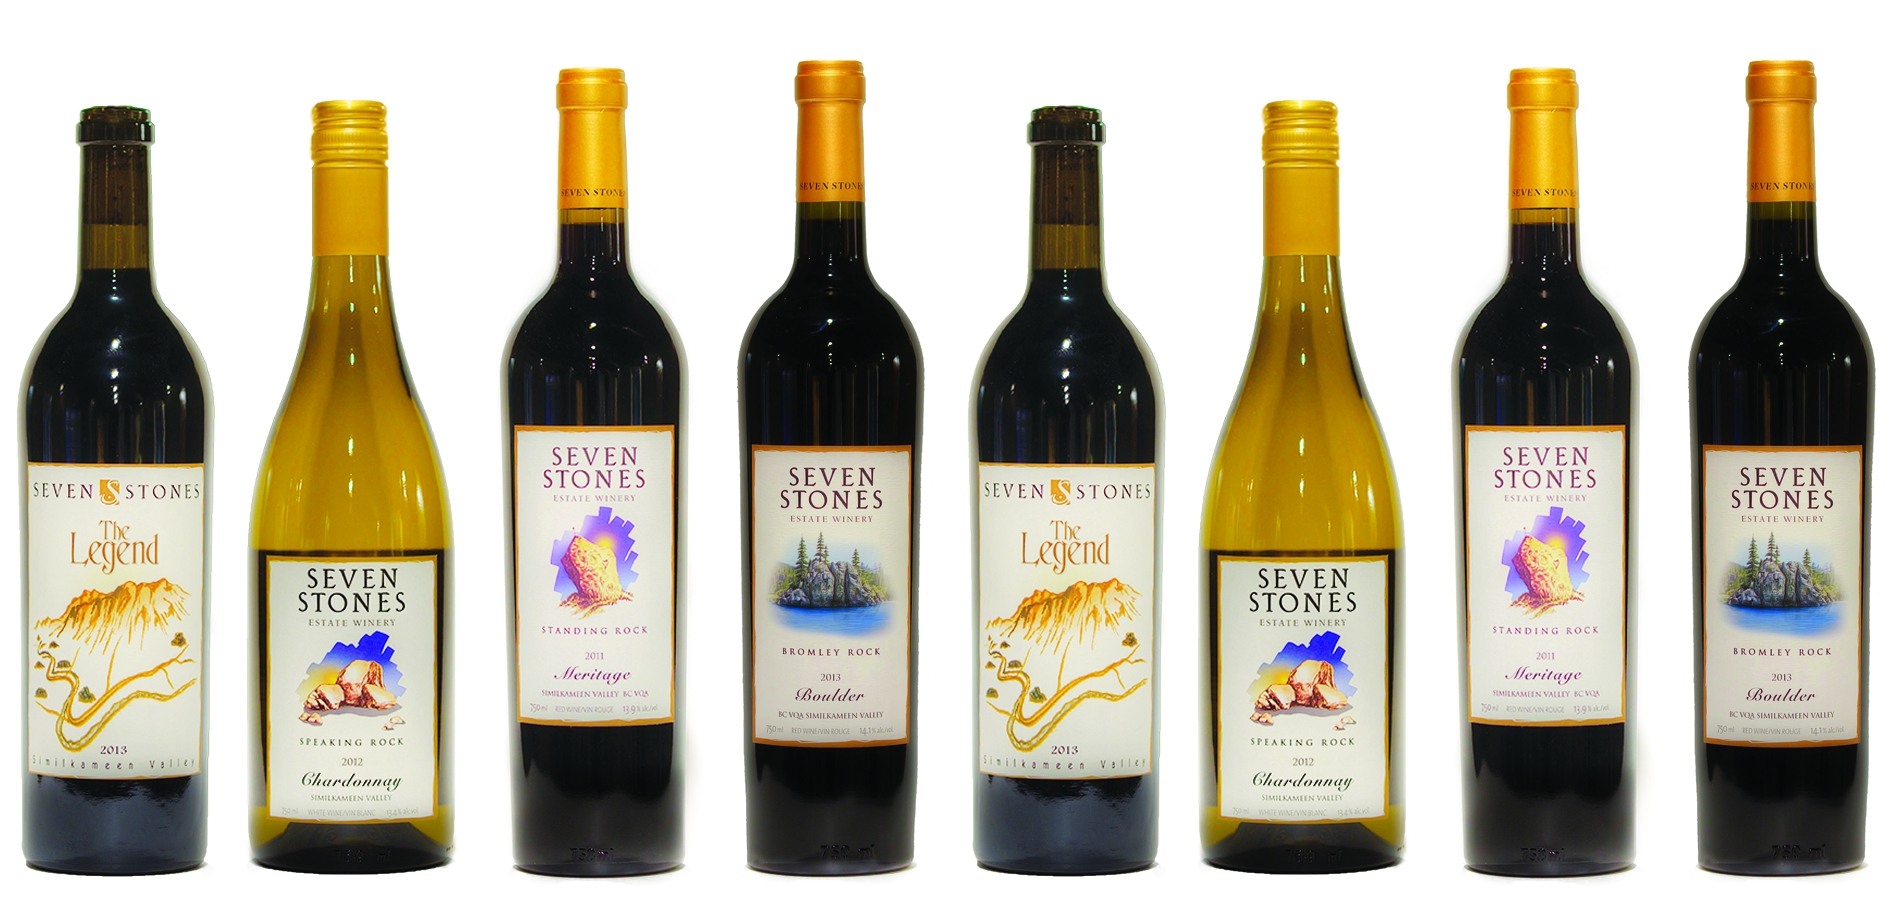 Seven Stones Winery image 2017